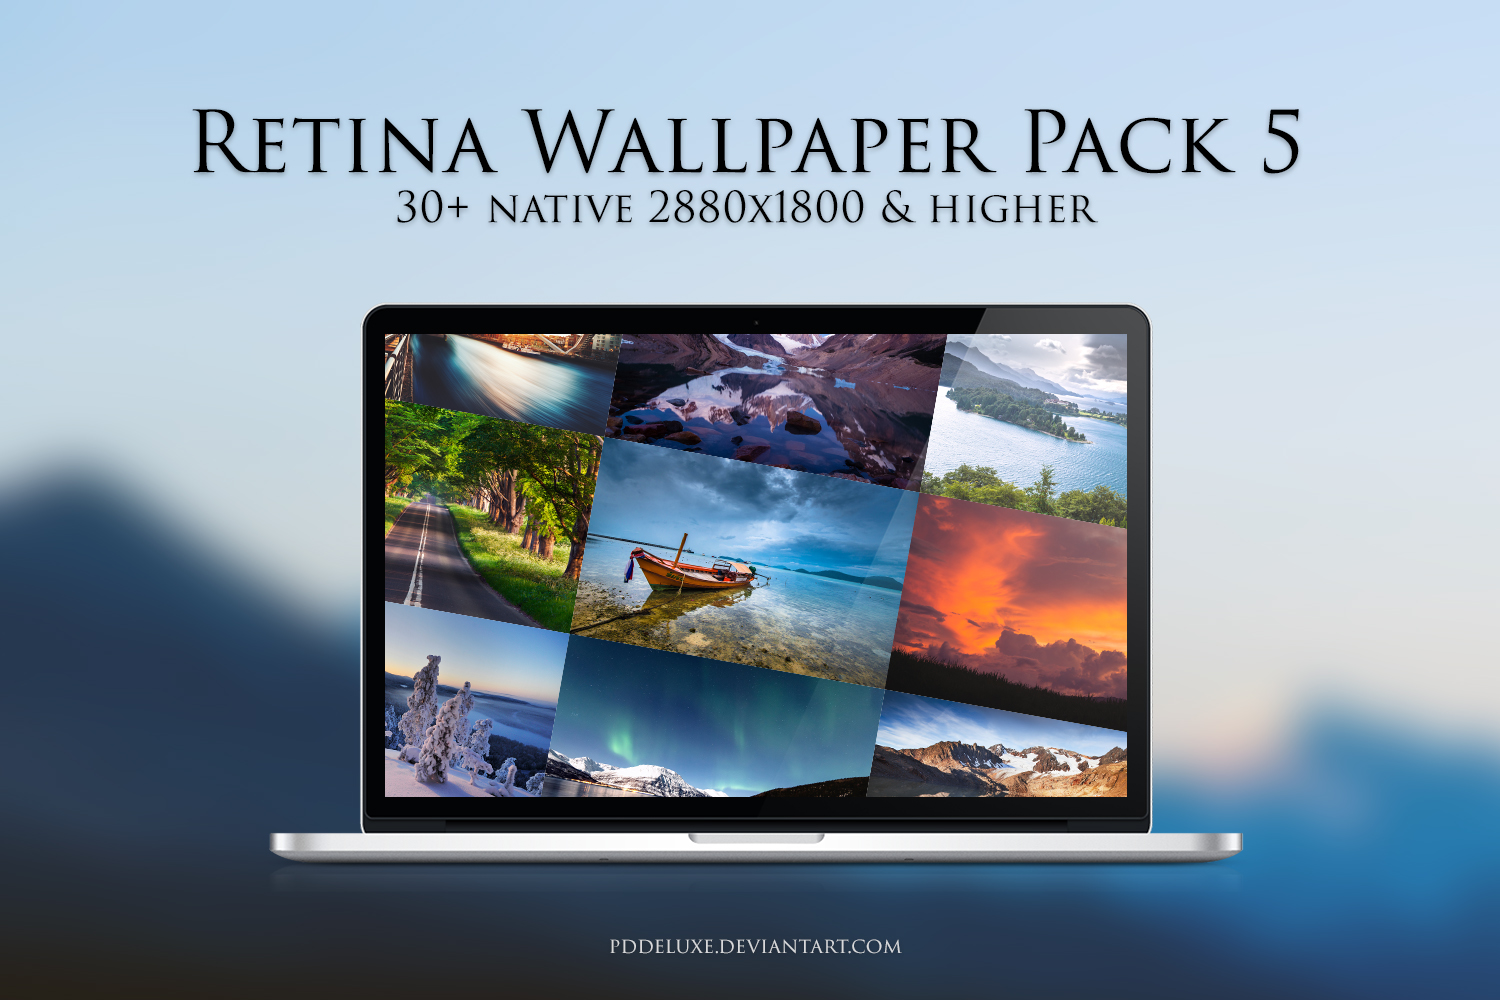 Retina Wallpaper Pack 2015 No 5 By Pddeluxe On Deviantart HD Wallpapers Download Free Map Images Wallpaper [wallpaper376.blogspot.com]